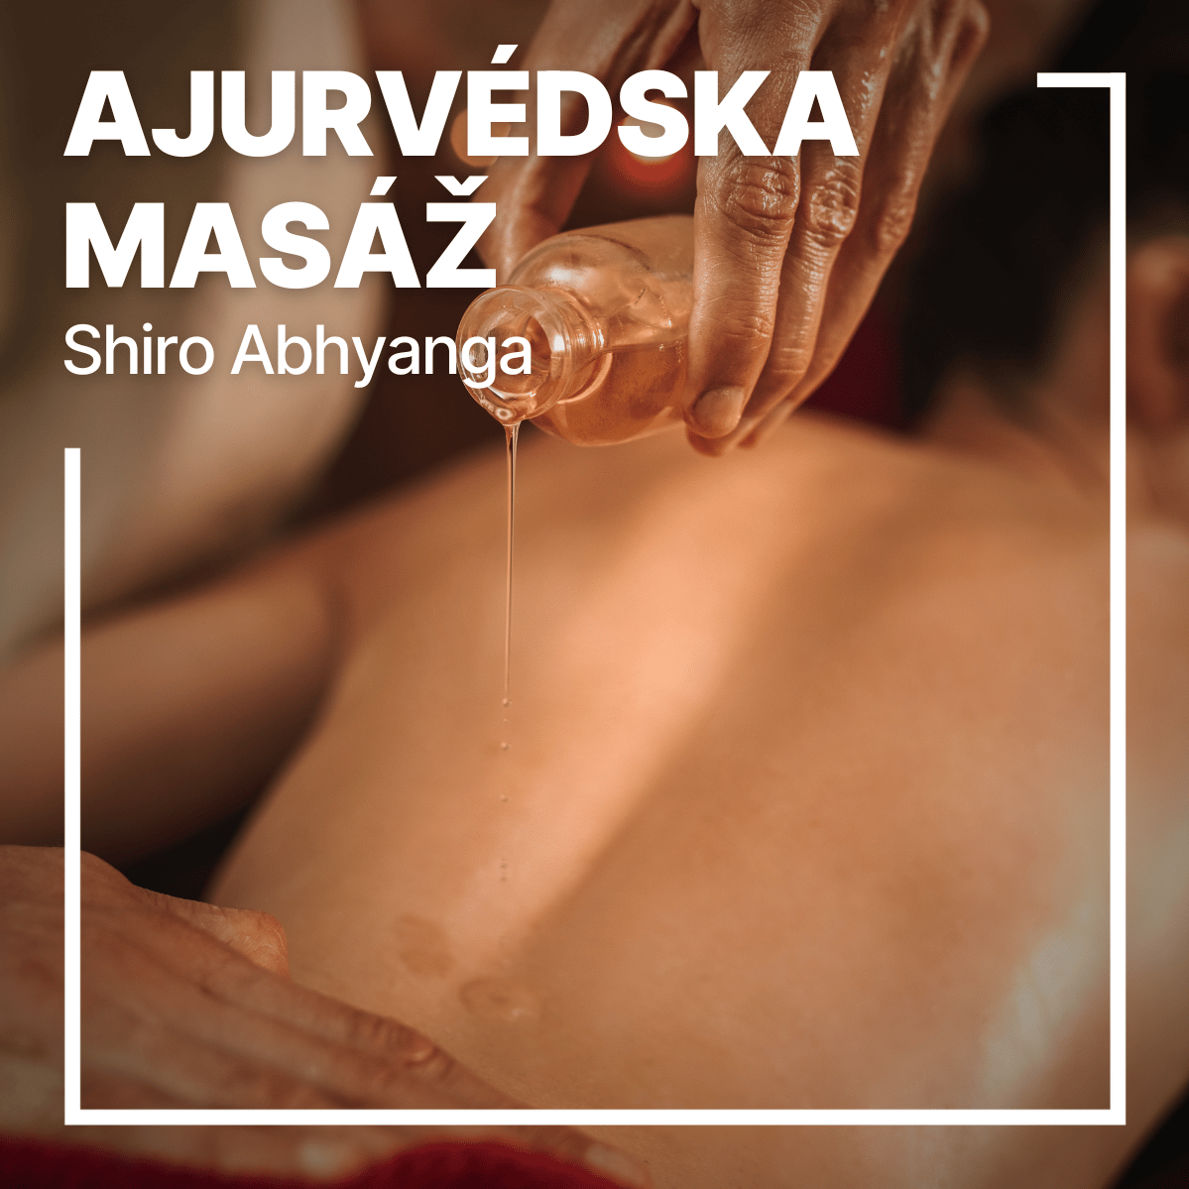 Ajurvedska masaz Shiro Abhyanga - Maserske kurzy - Nadstavbove kurzy - Global Education Centre